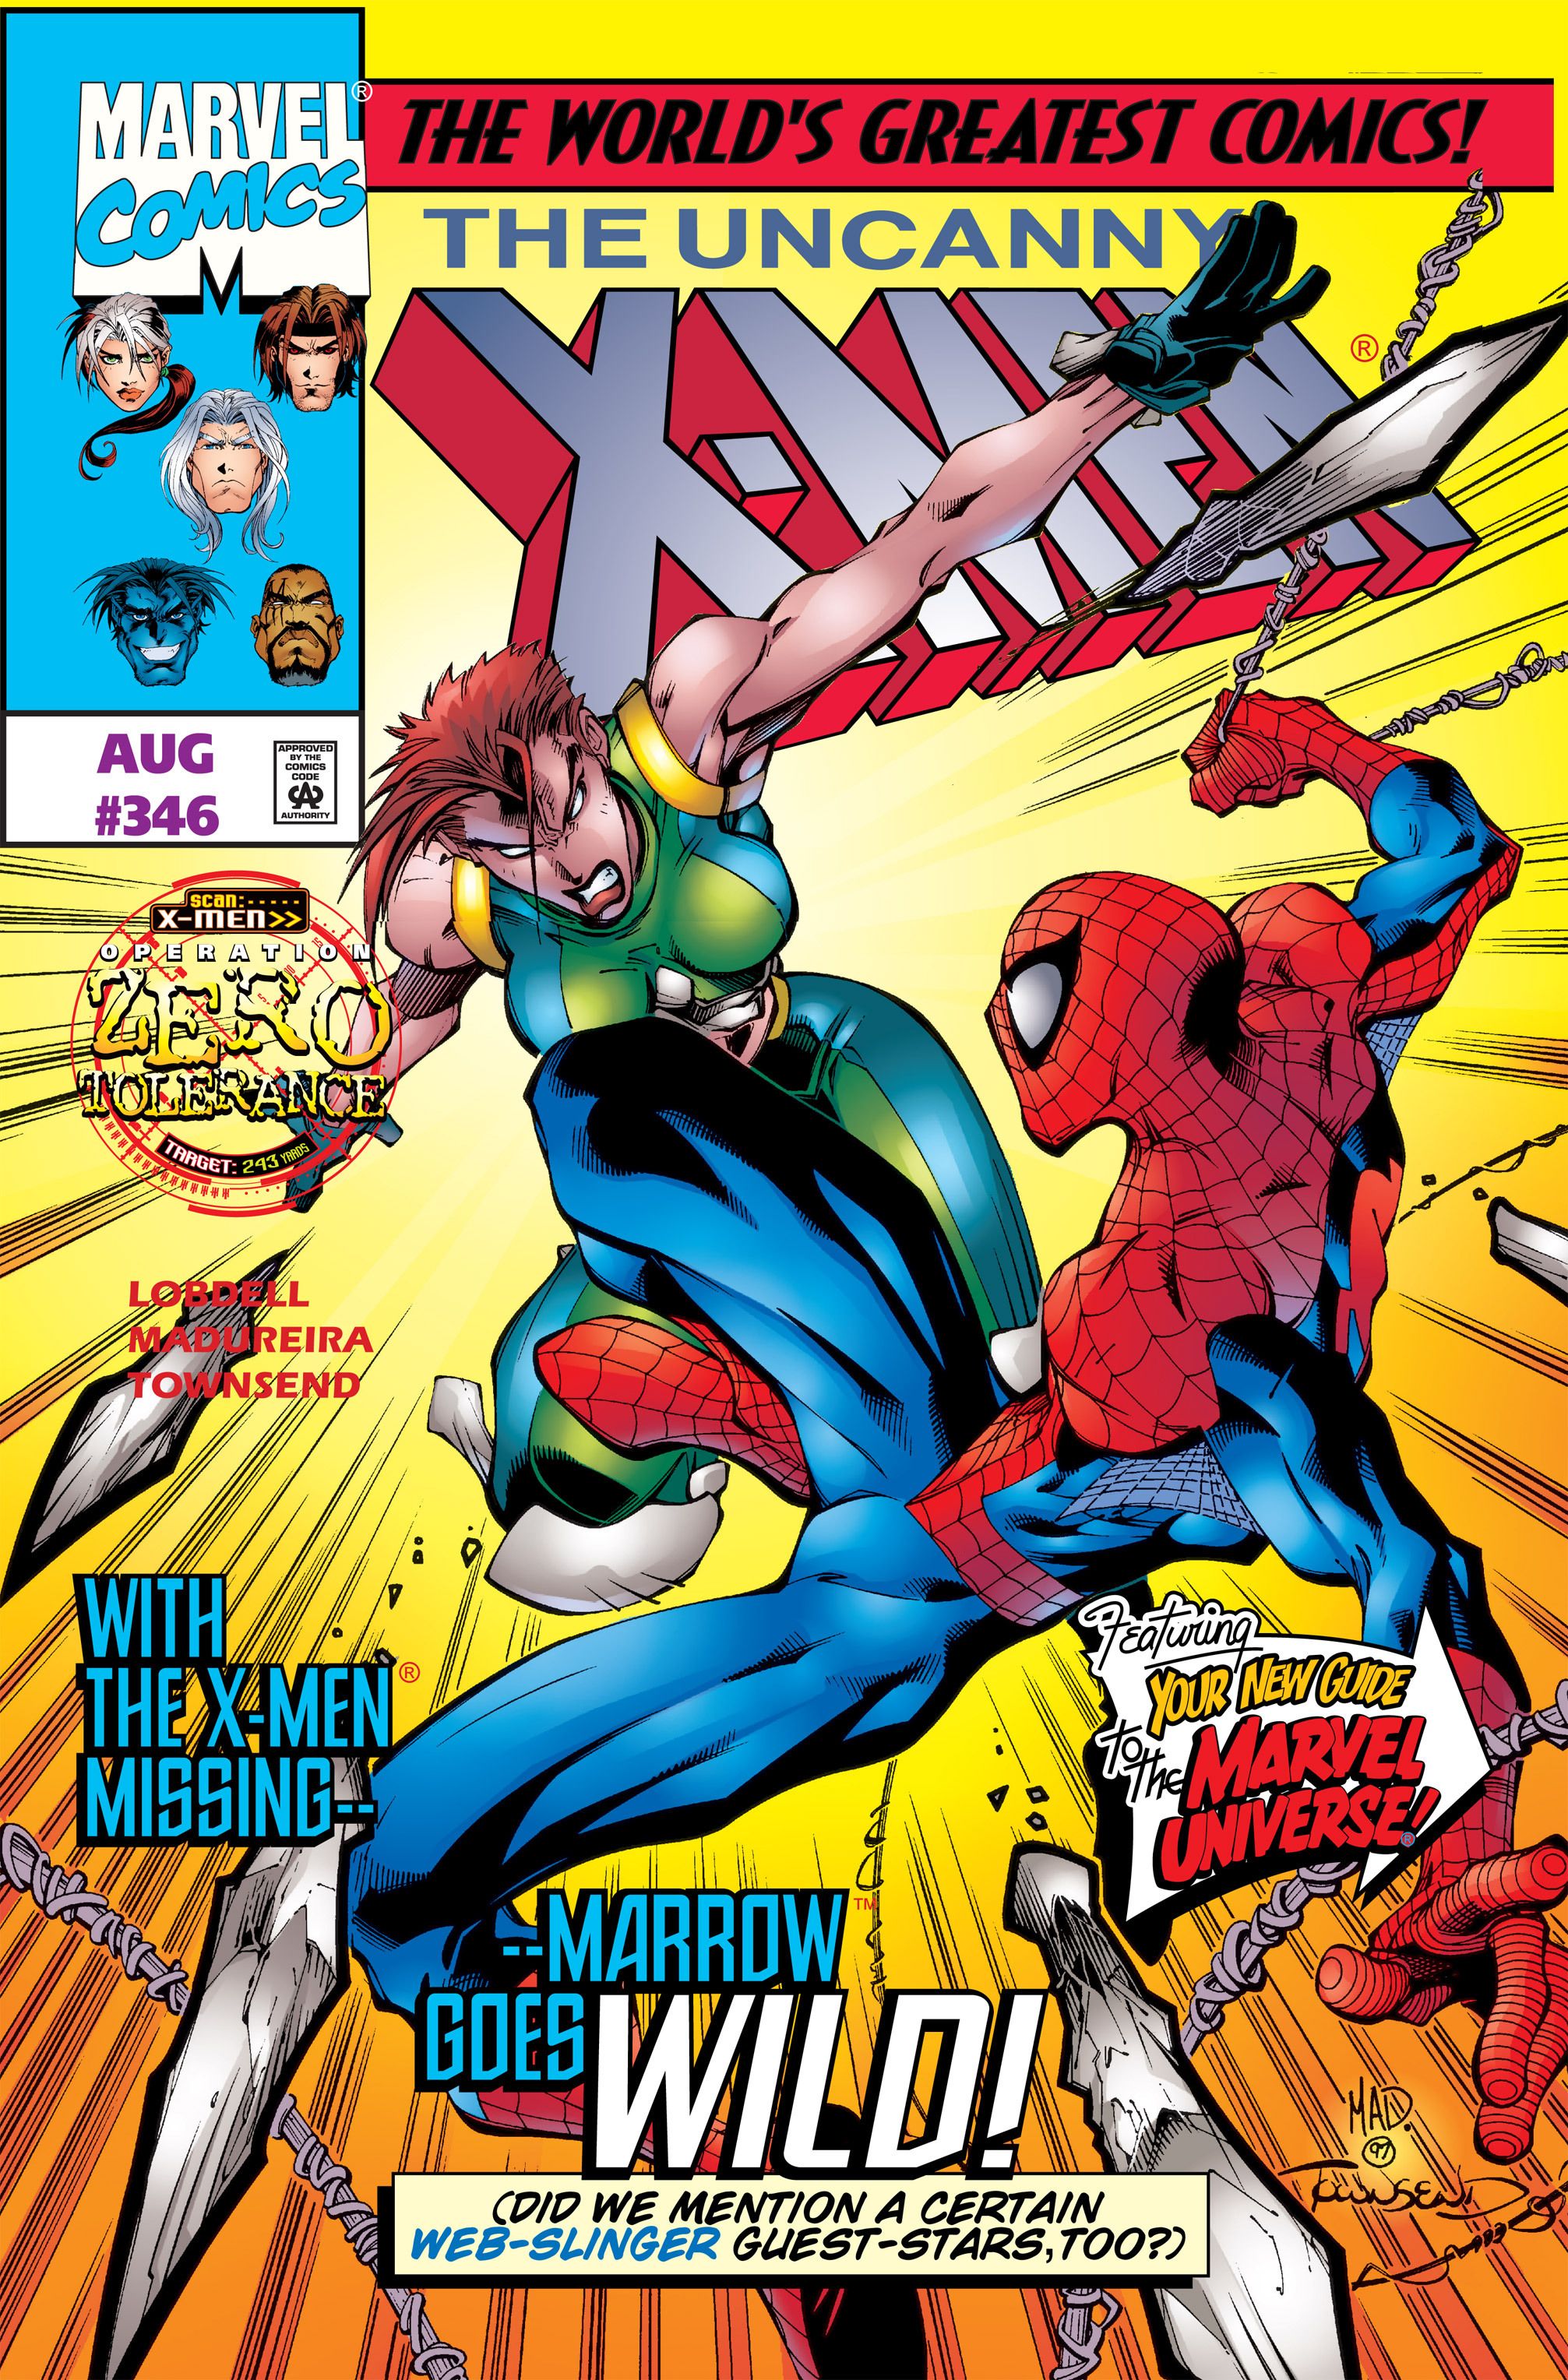 The cover of Uncanny X-Men 346